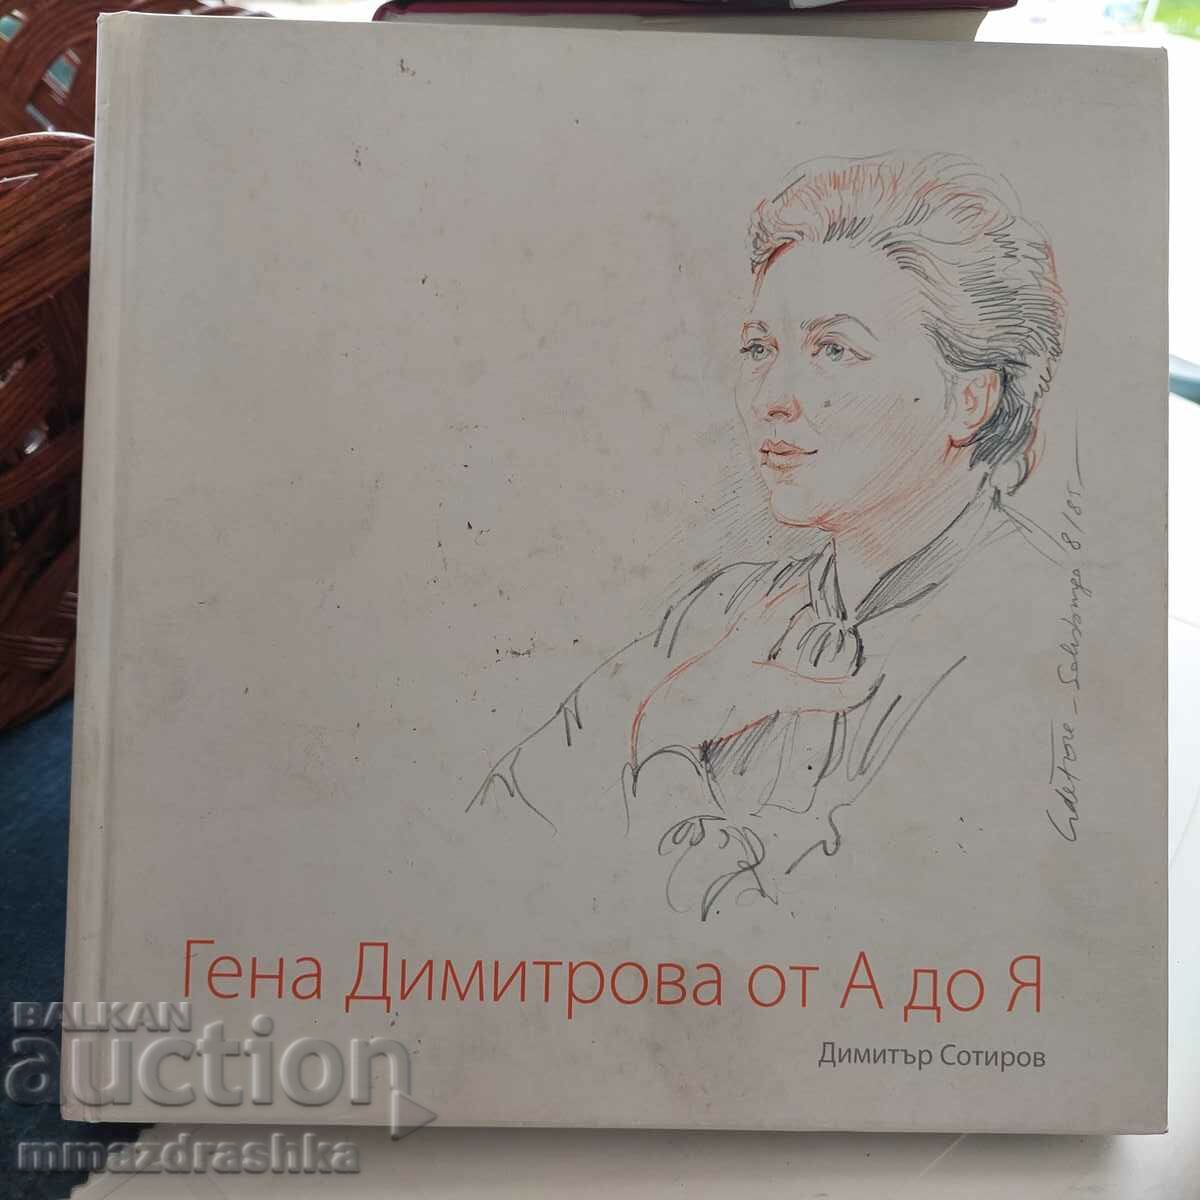 Gena Dimitrova από το Α έως το Ω, Dimitar Sotirov